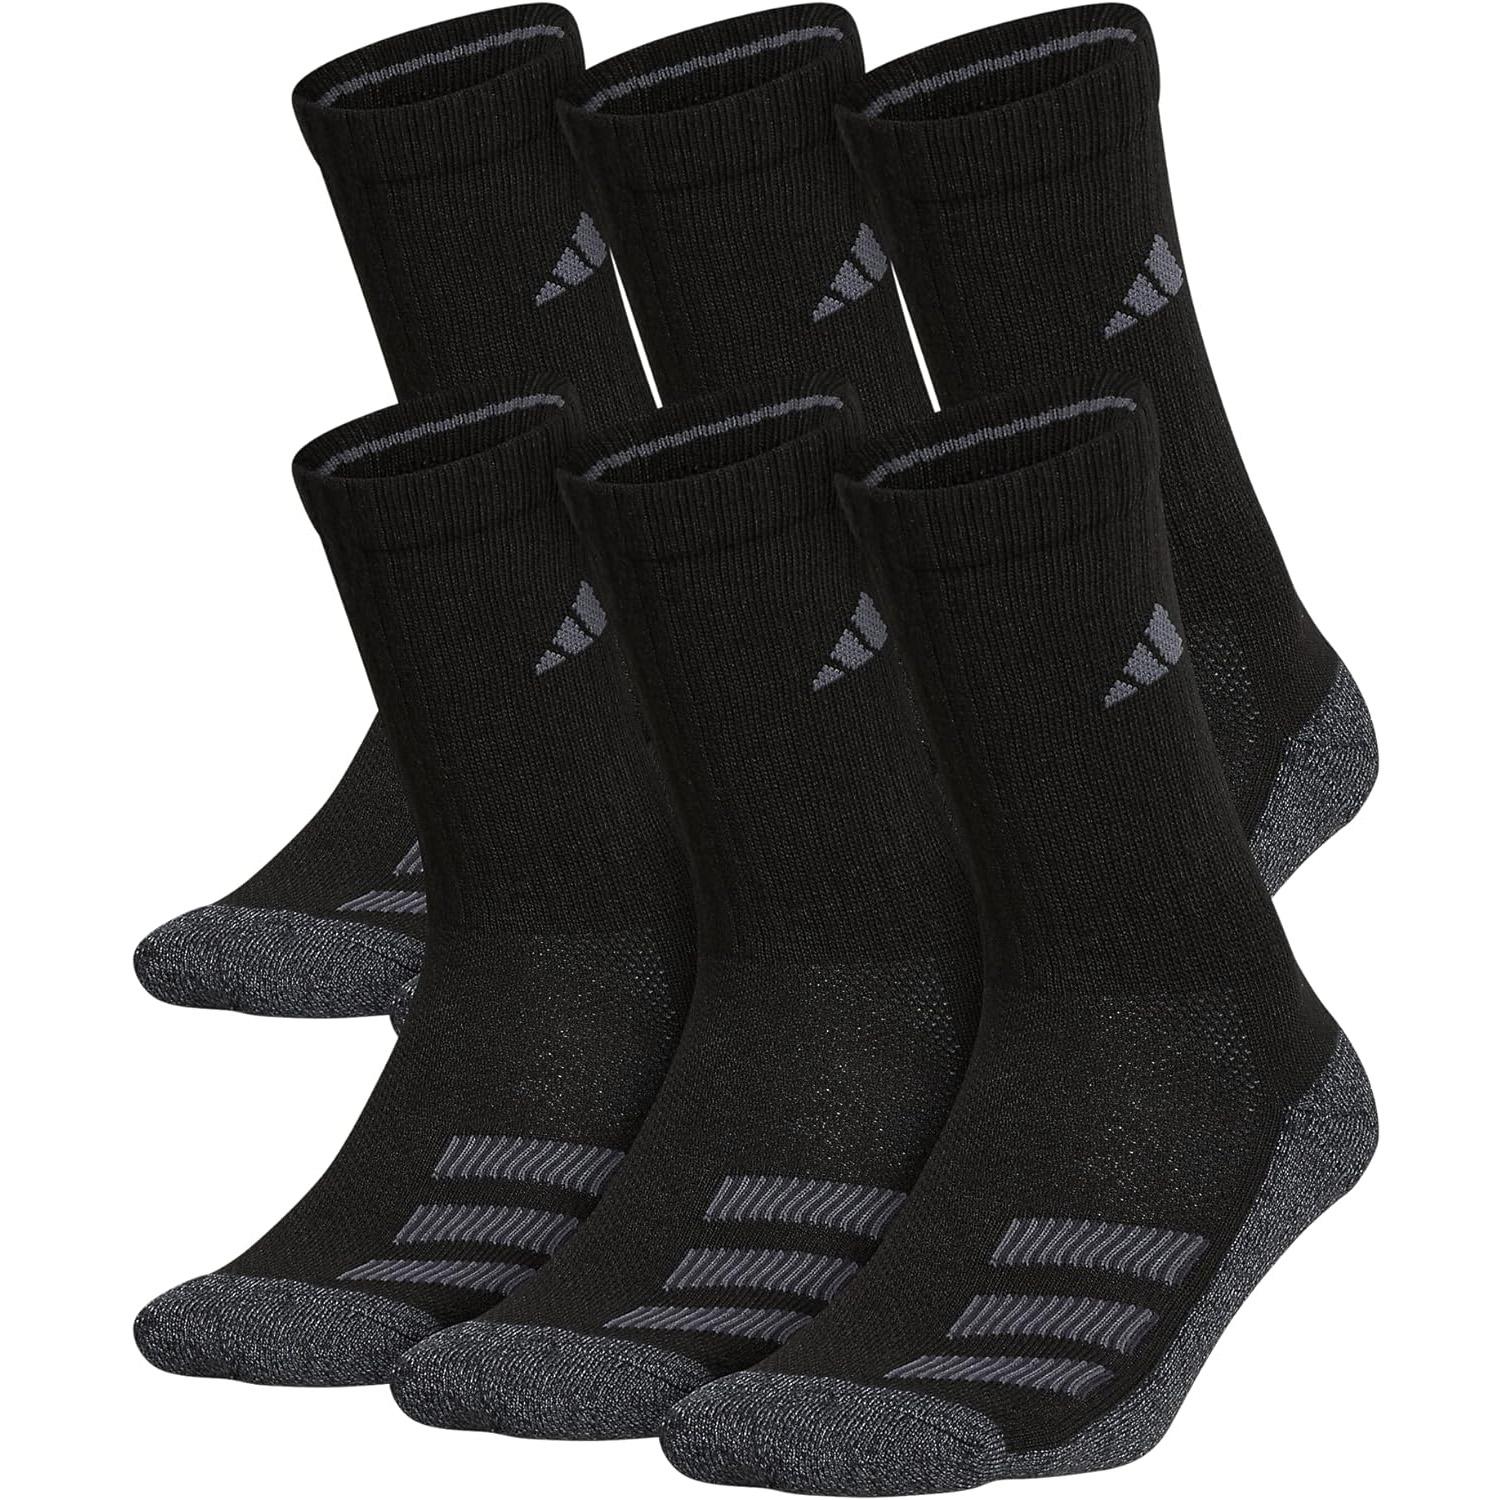 Adidas Kids Cushioned Angle Stripe Crew Socks 6 Pack for $6.97